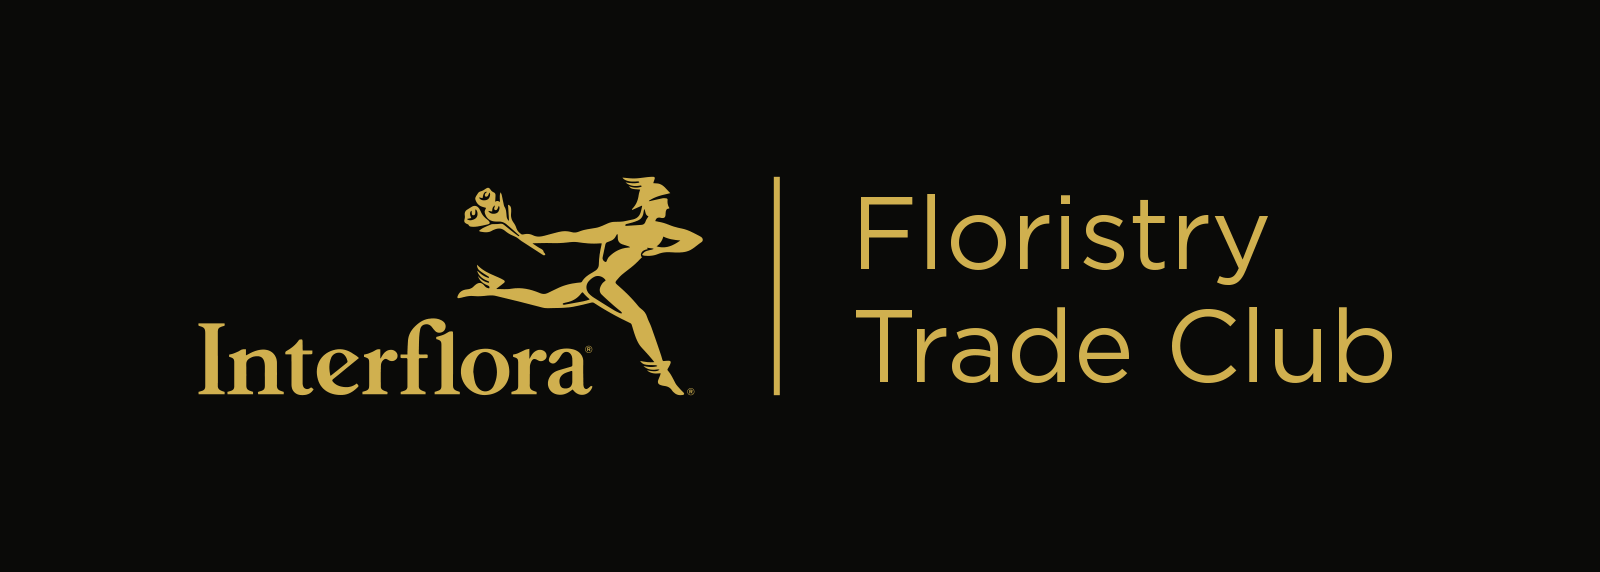 Interflora Floristry Trade Club logo